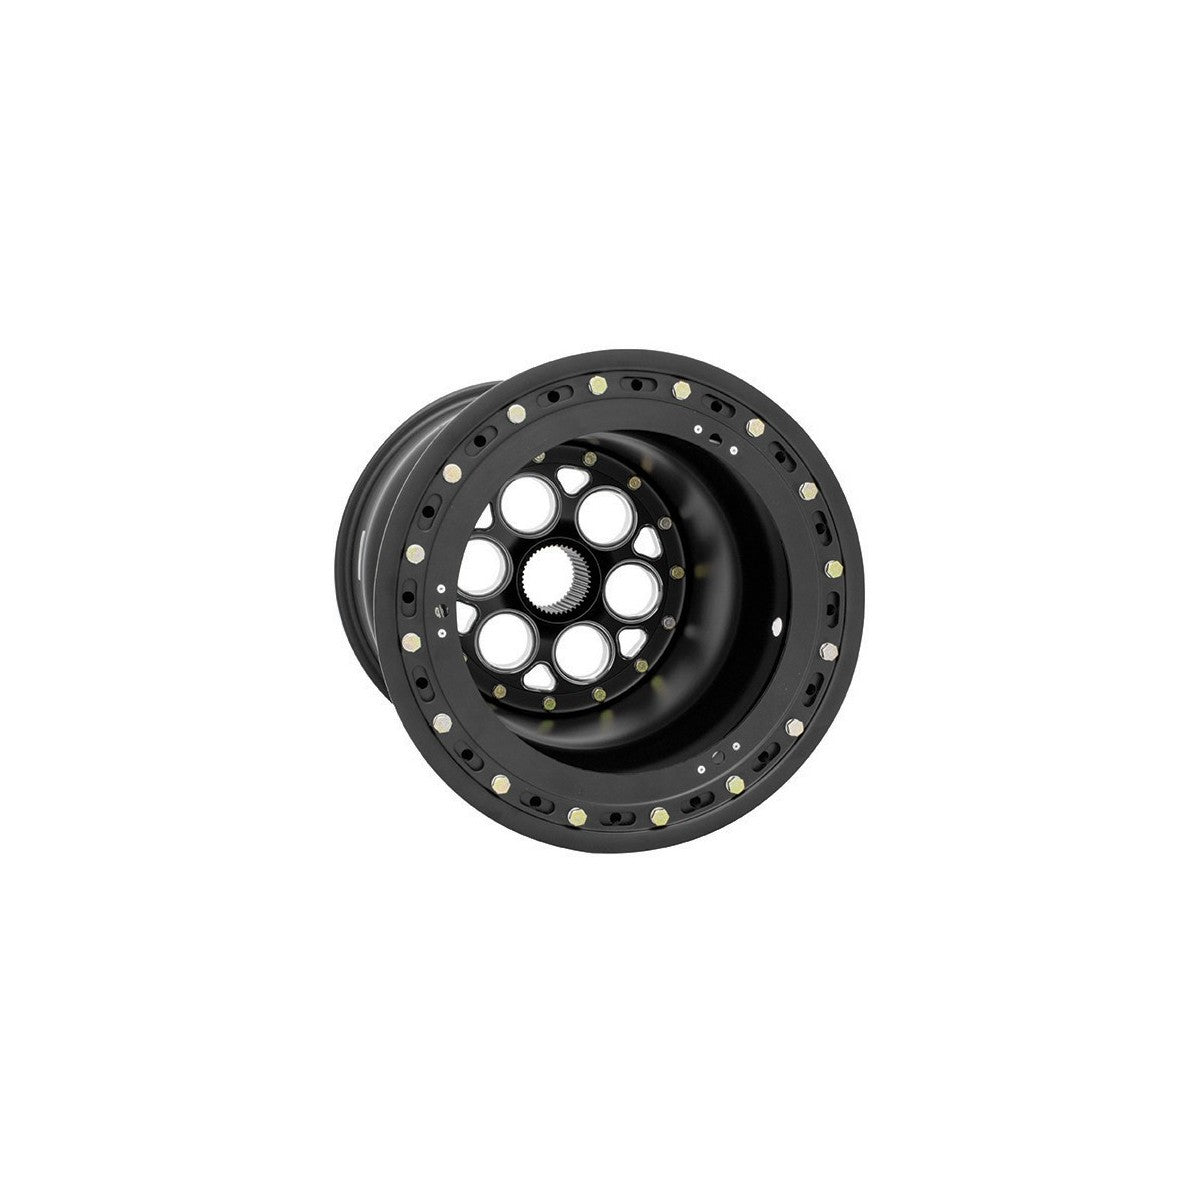 Weld 735B-51565-6 Magnum Sprint Wheel 15x15 42-Spline ET0 BS5 Black Center - Polished Shell